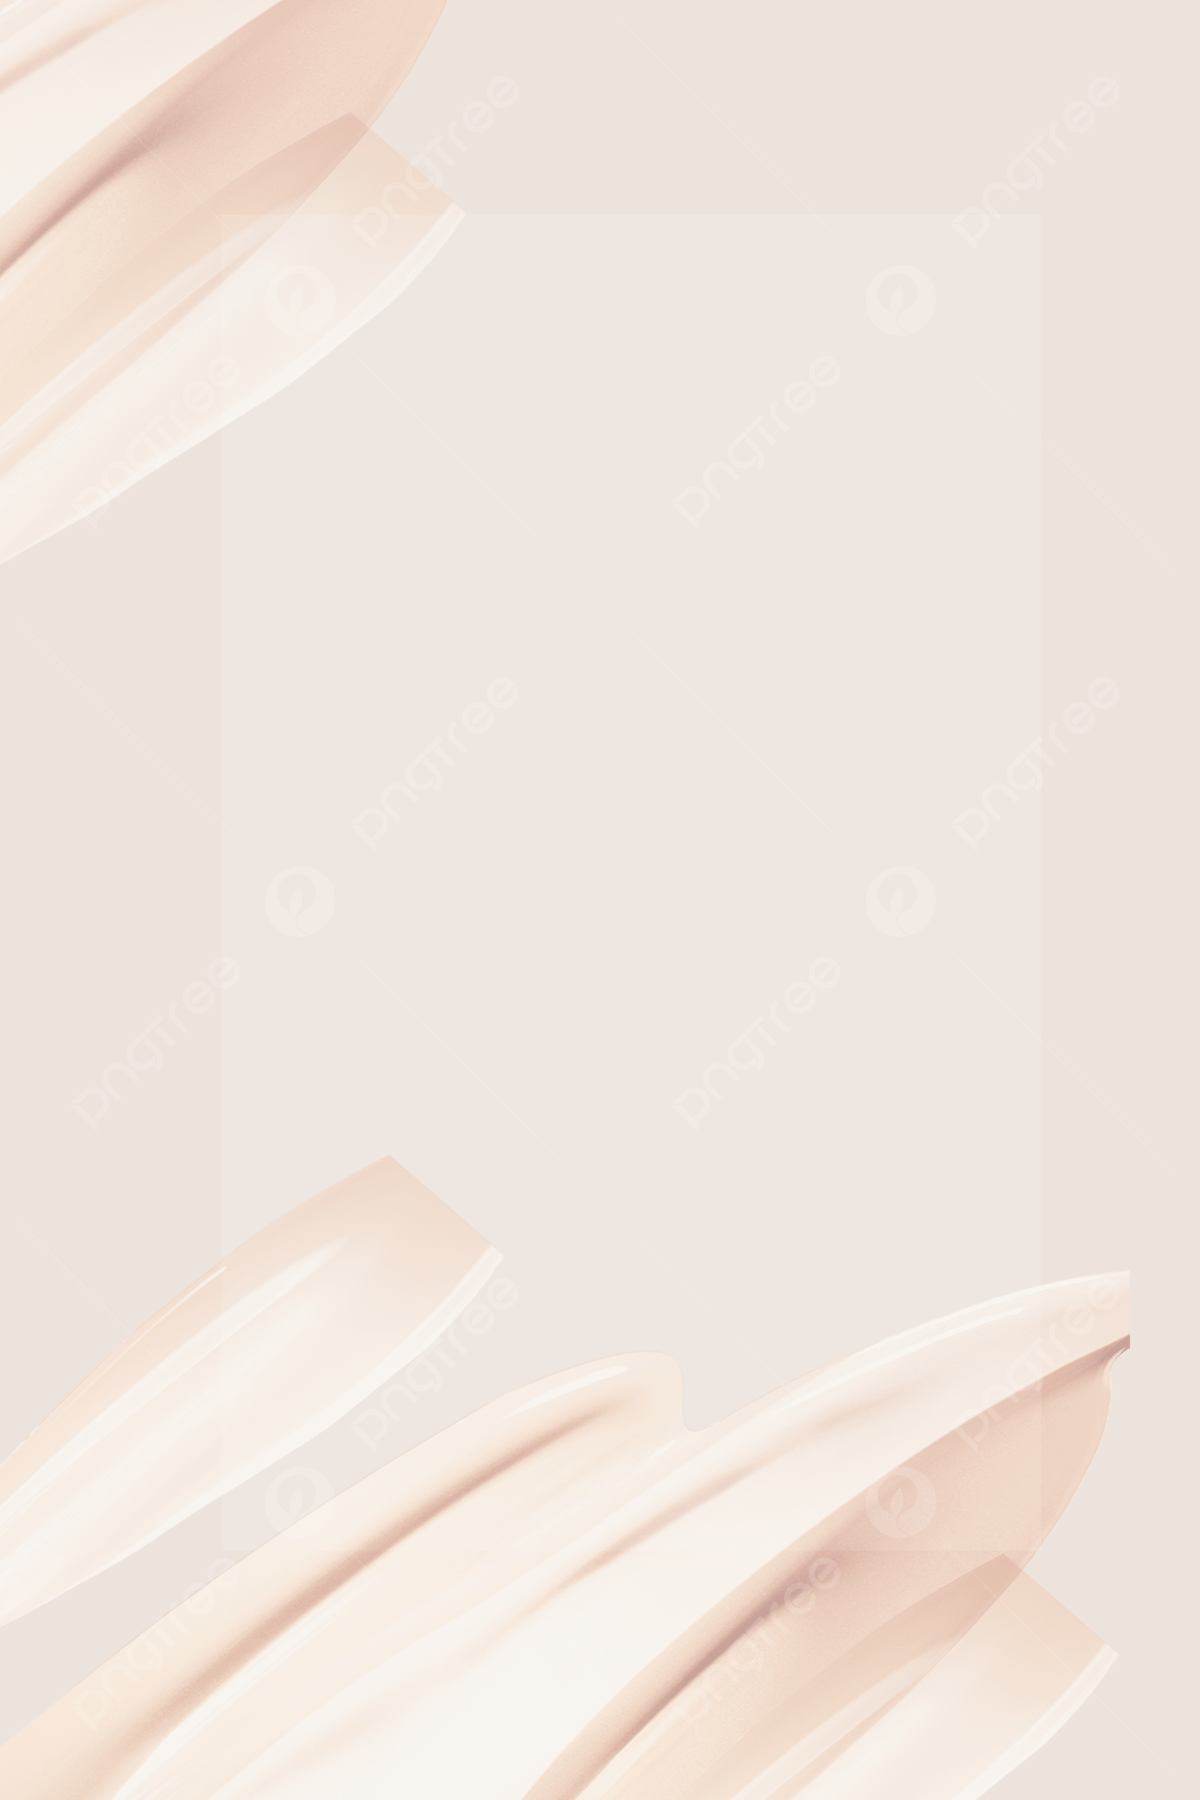  Schönheit Hintergrundbild 1200x1800. Aesthetical Beauty Makeup Concealer Simple Background Wallpaper Image For Free Download